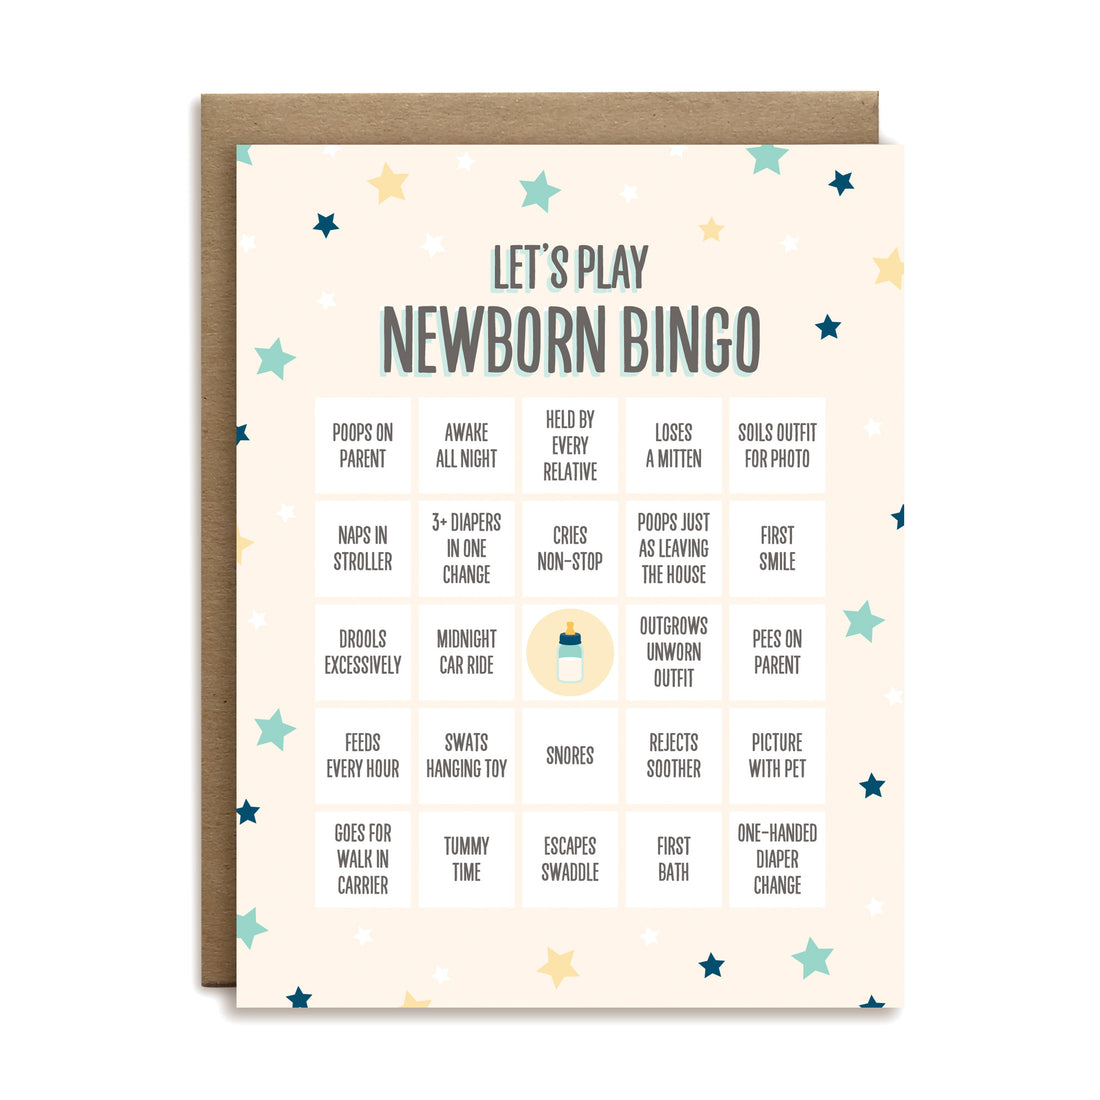 Newborn bingo baby greeting card by I&